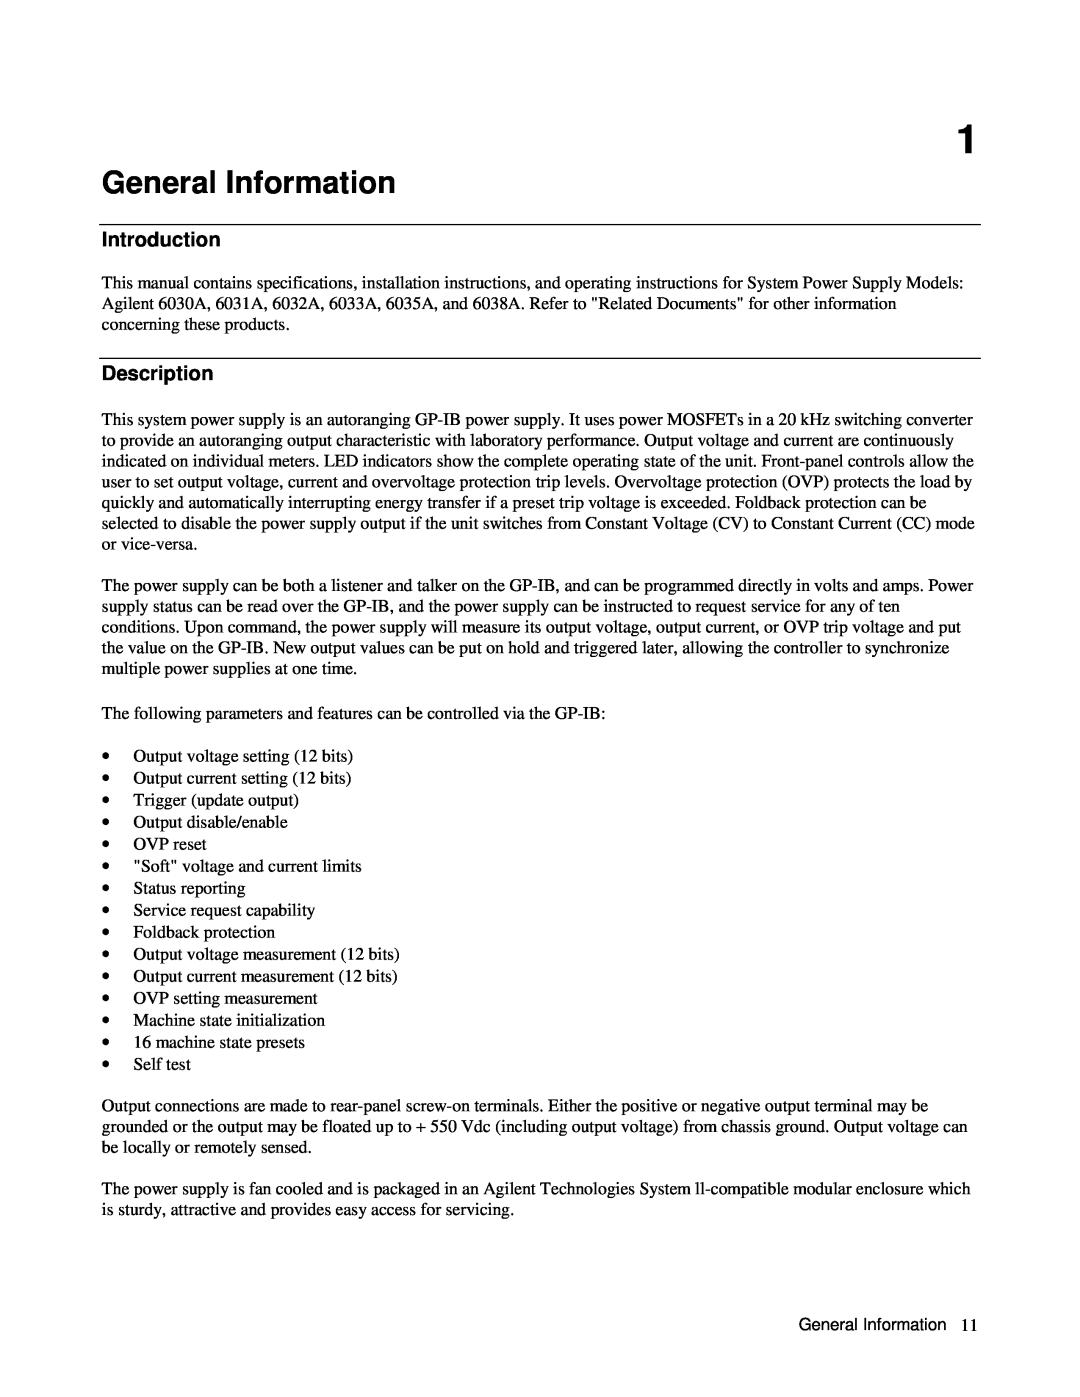 Agilent Technologies Serials 2934A-01825 to 01829 3023A-01925 manual General Information, Introduction, Description 